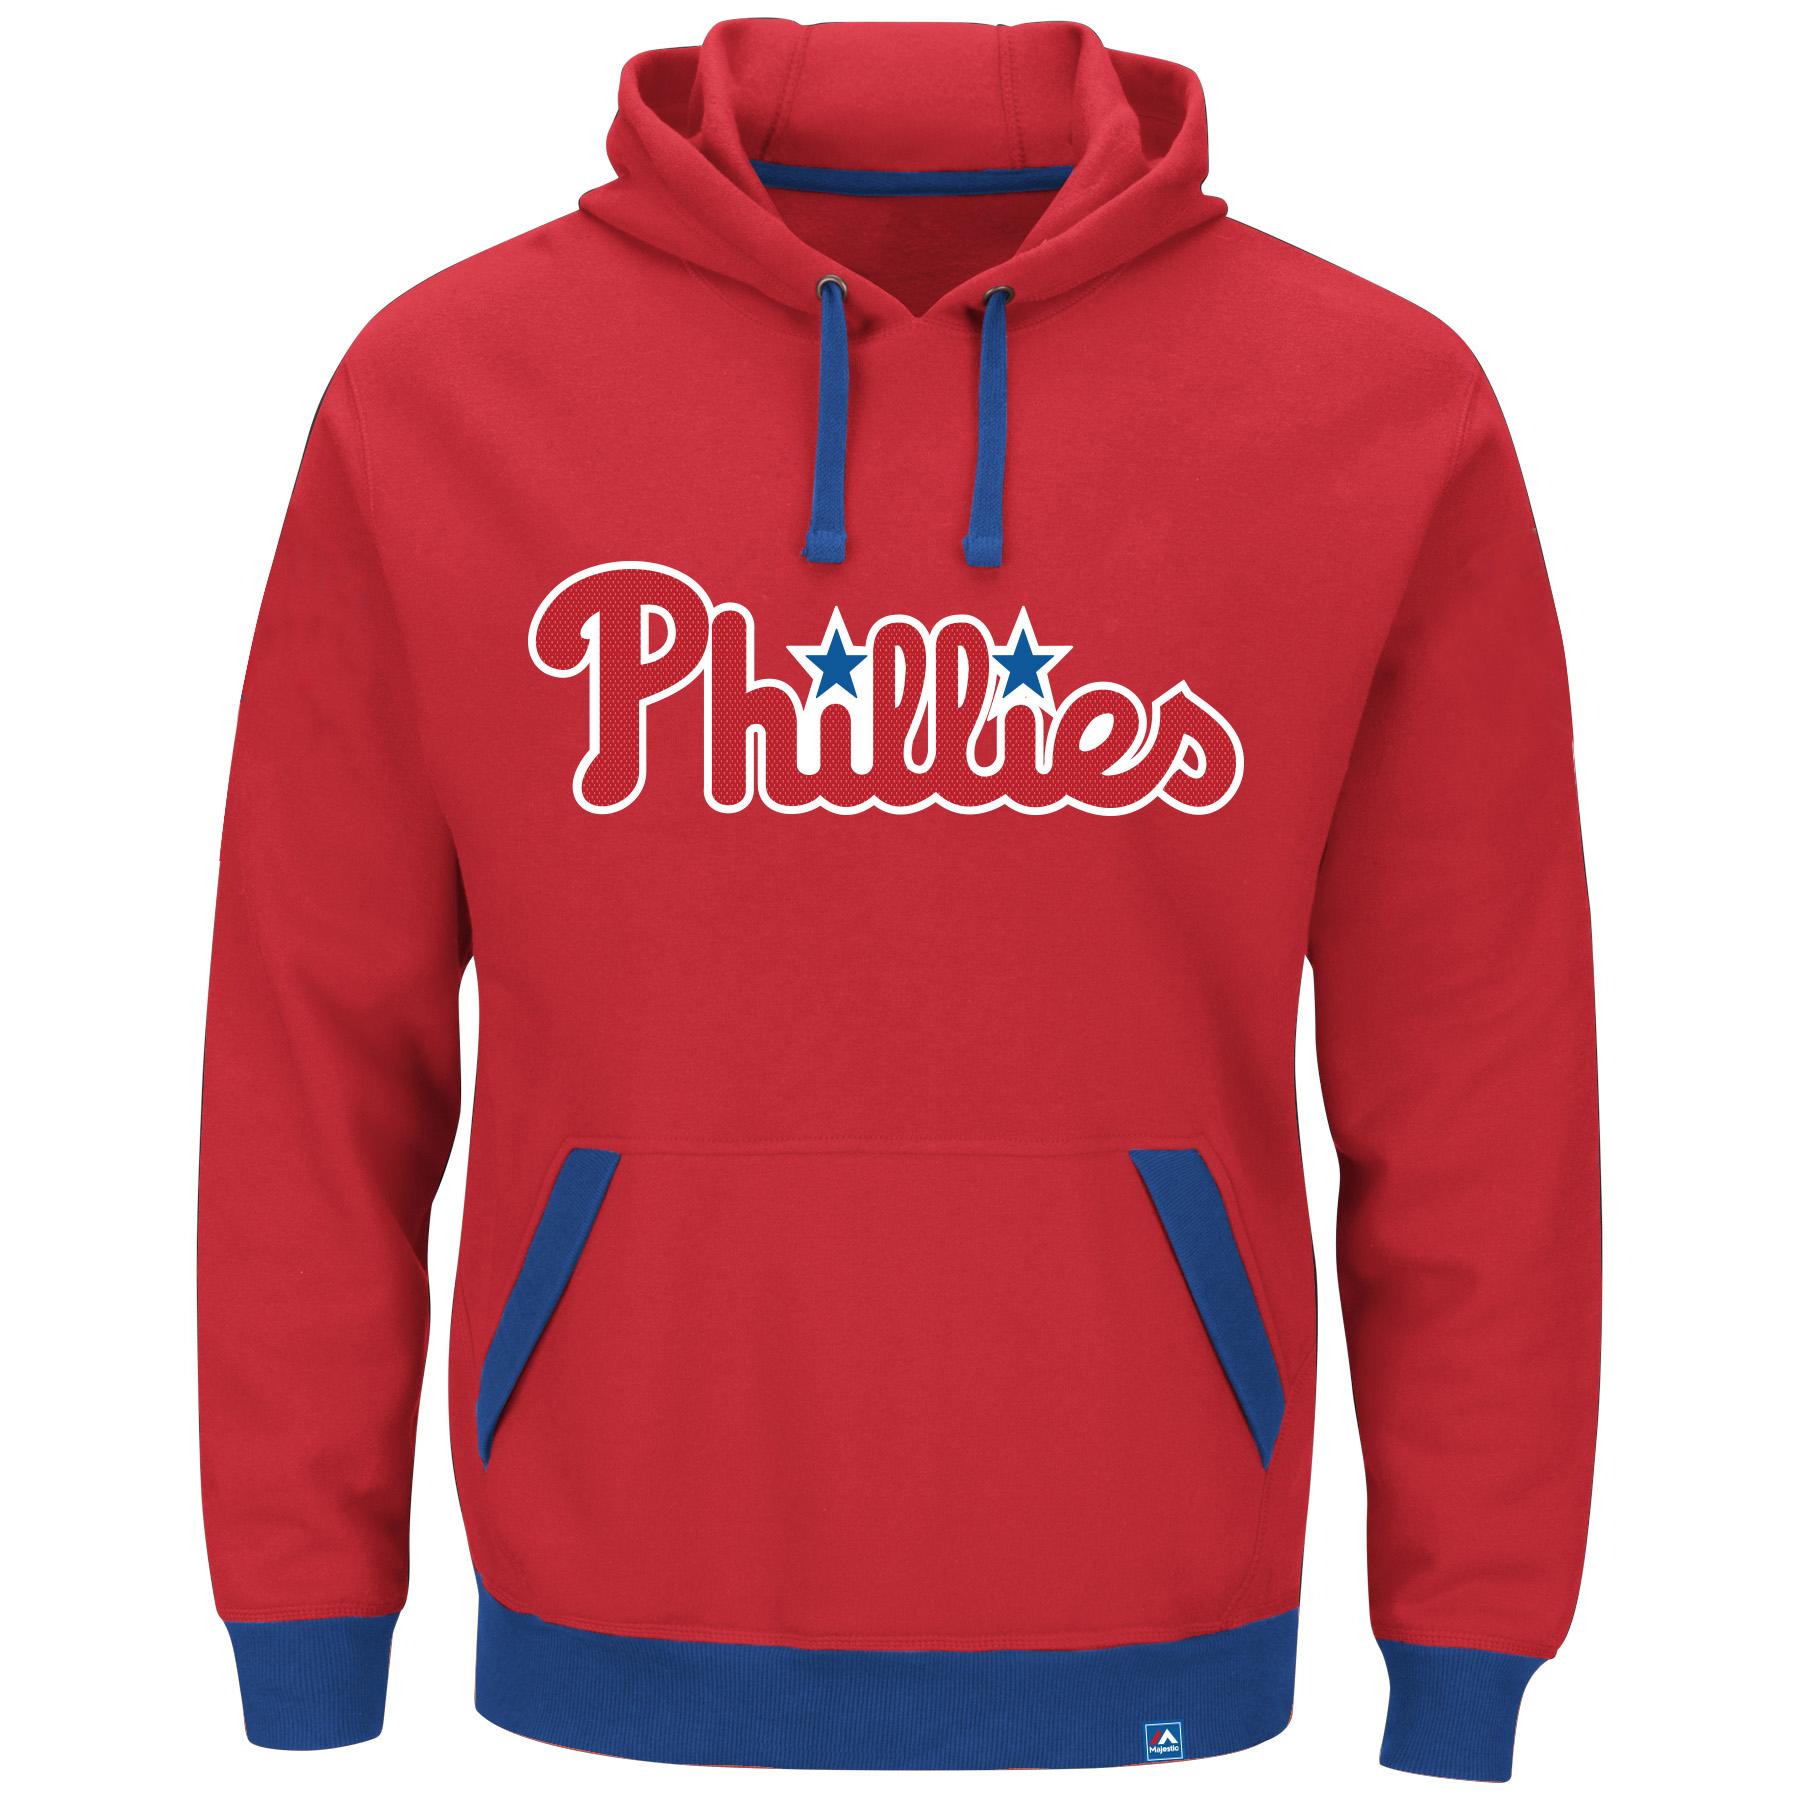 MLB Men's Big & Tall Hoodie - Philadelphia Phillies